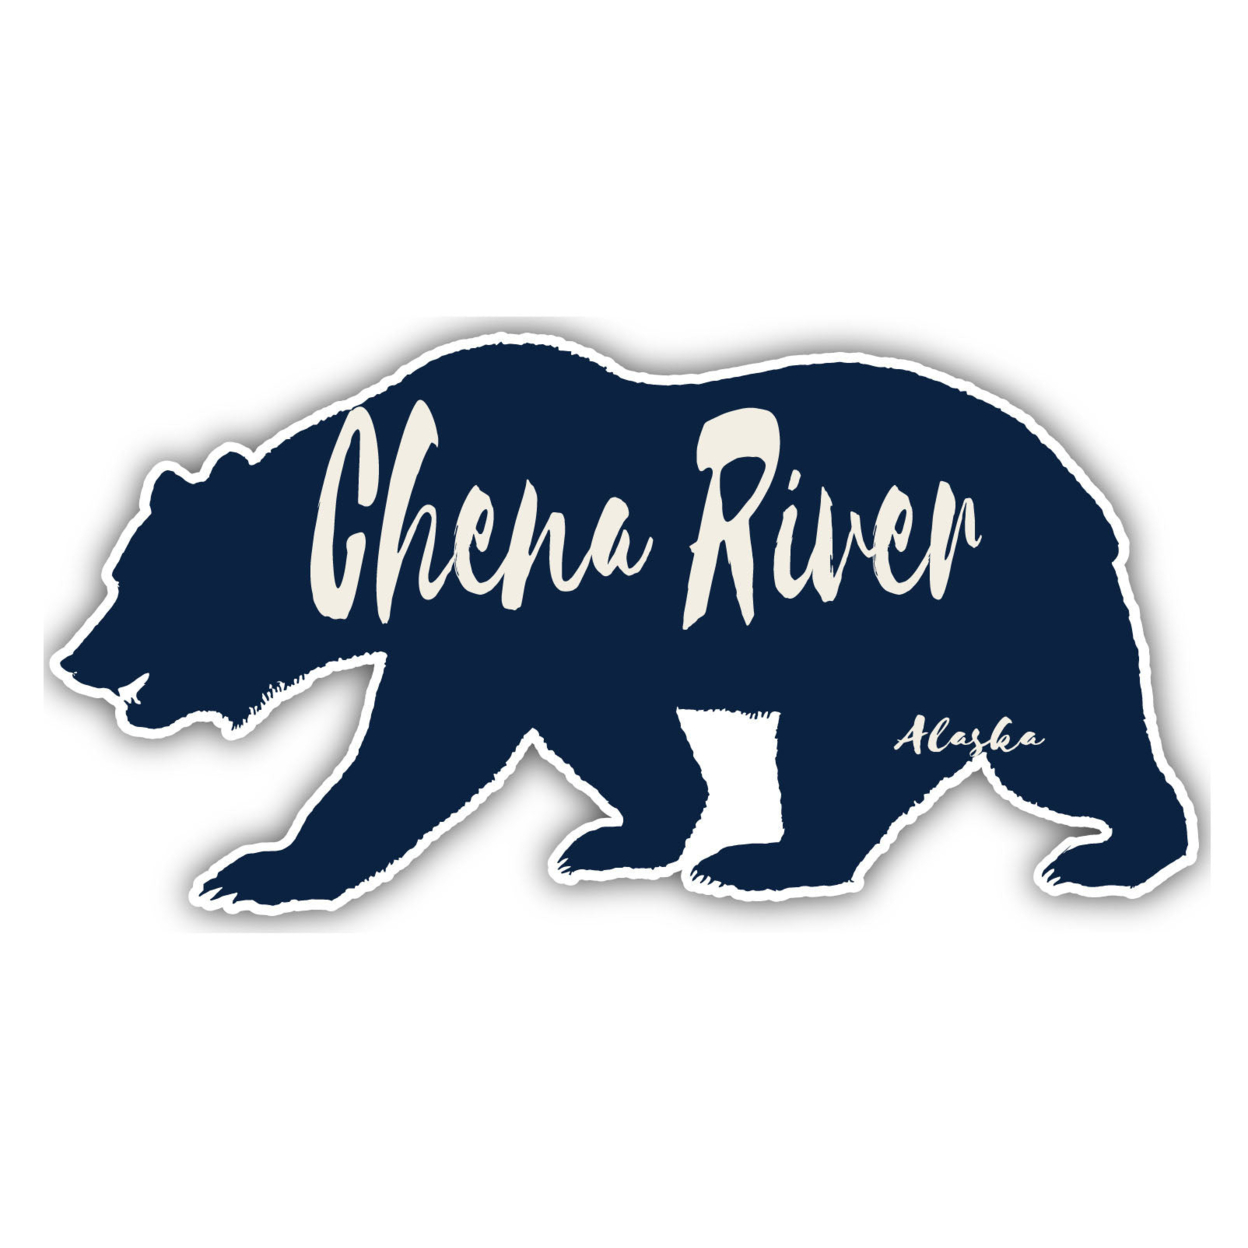 Chena River Alaska Souvenir Decorative Stickers (Choose Theme And Size) - Single Unit, 2-Inch, Bear